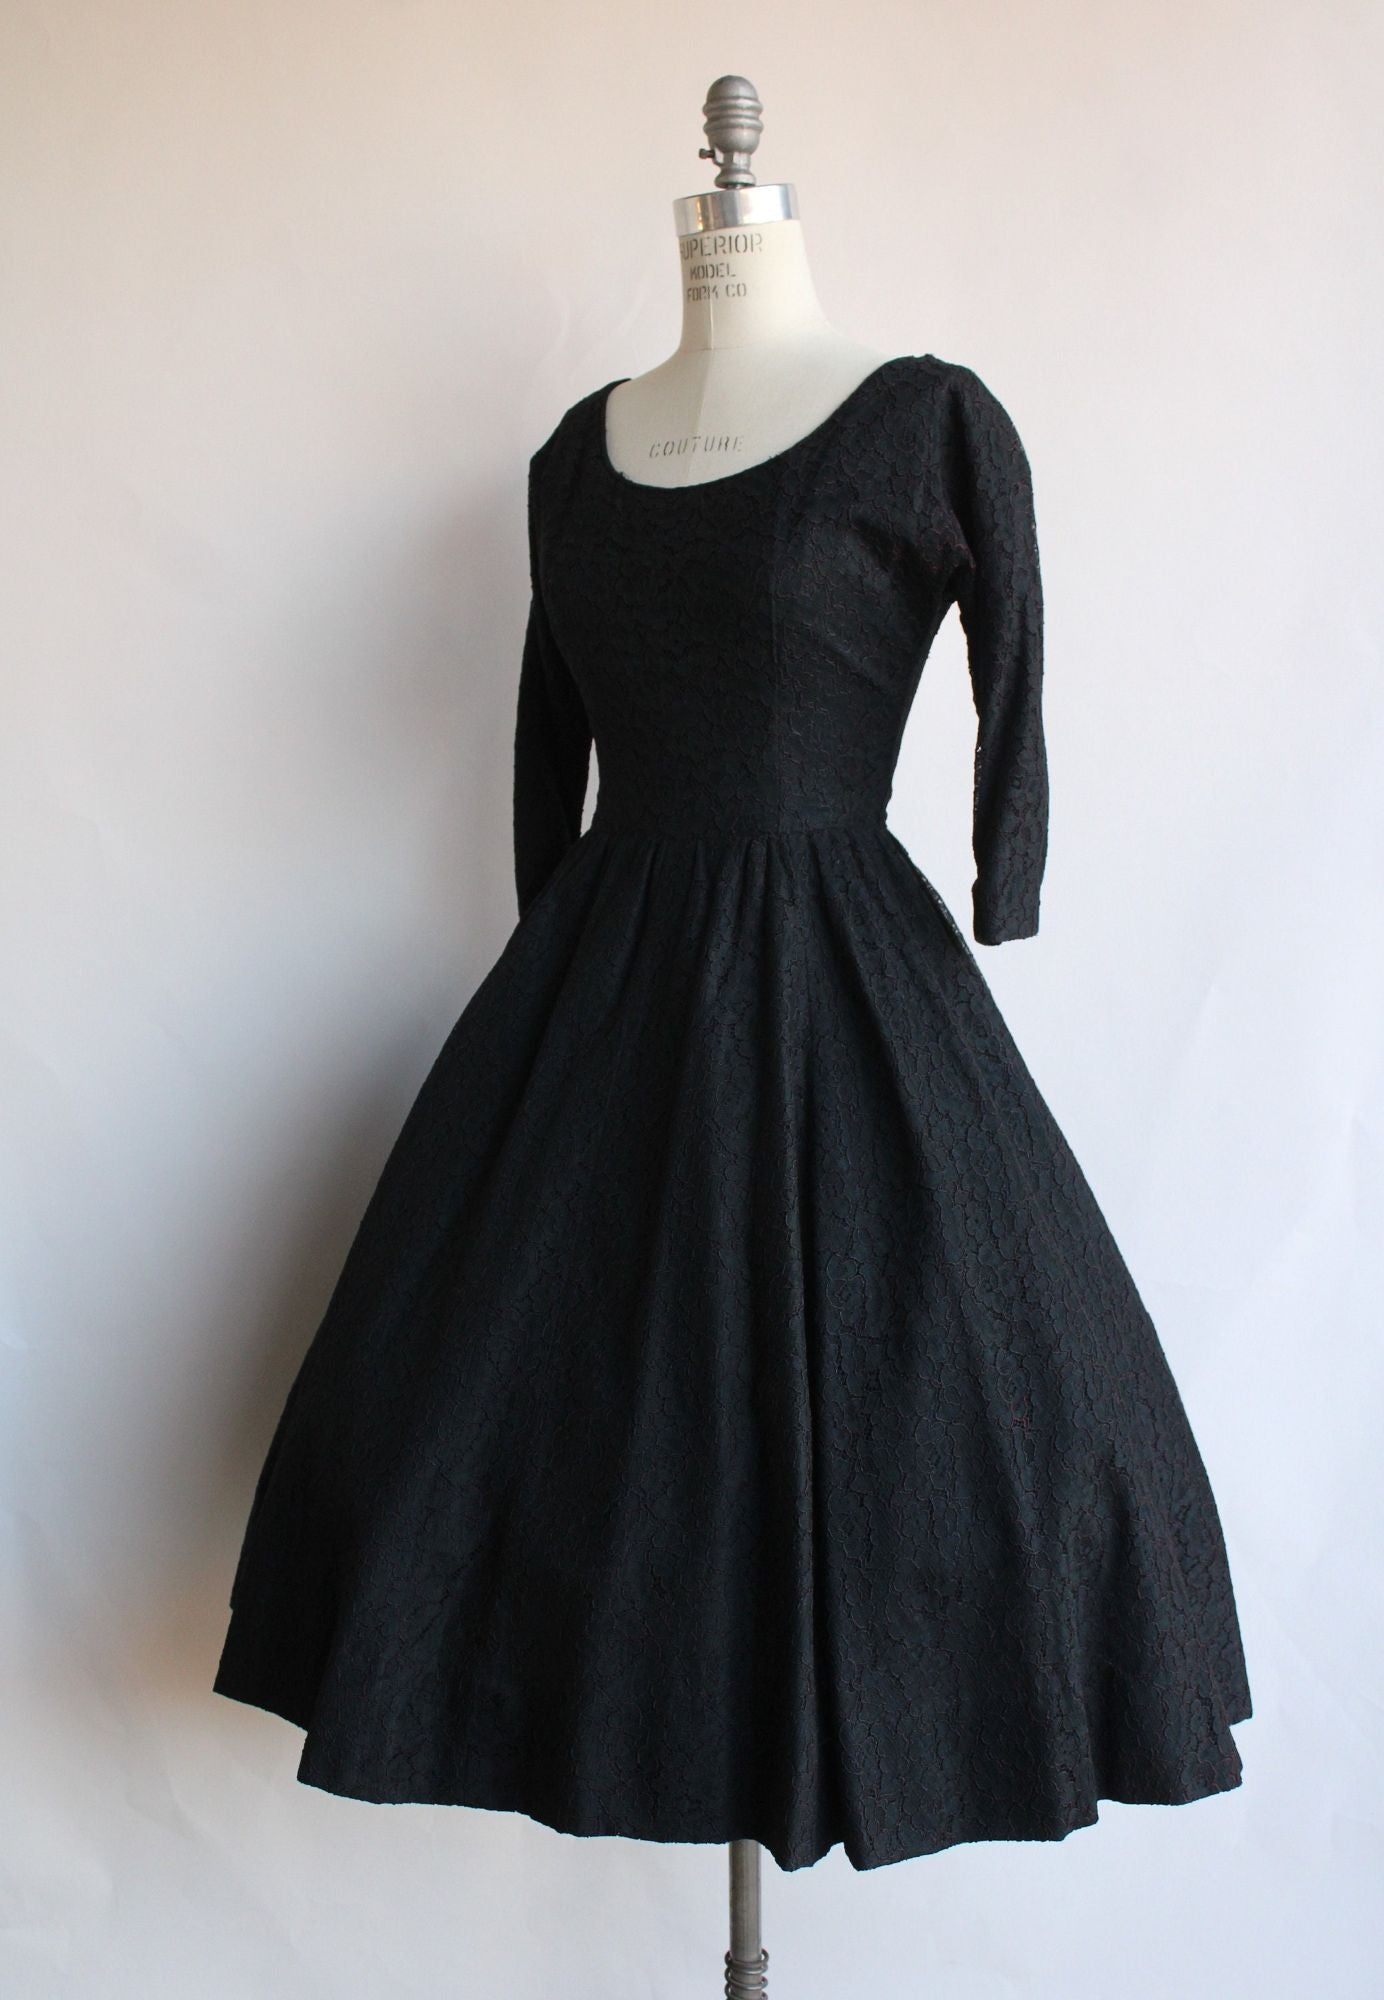 Vintage 1950s Black Lace Dress with Pocket